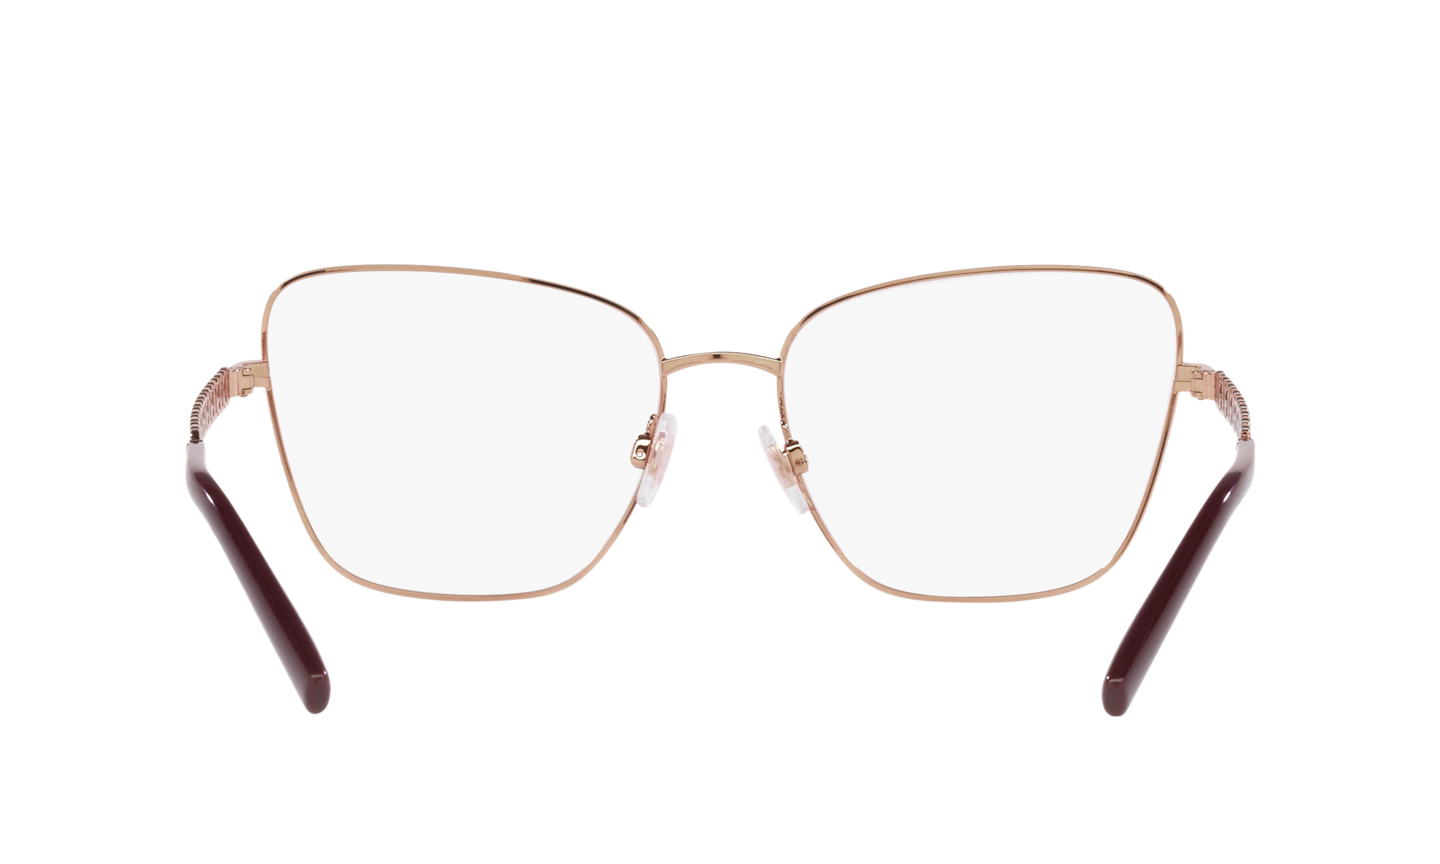 Dolce & Gabbana Pink Gold/Matte Bordeaux Eyeglasses | Glasses.com 